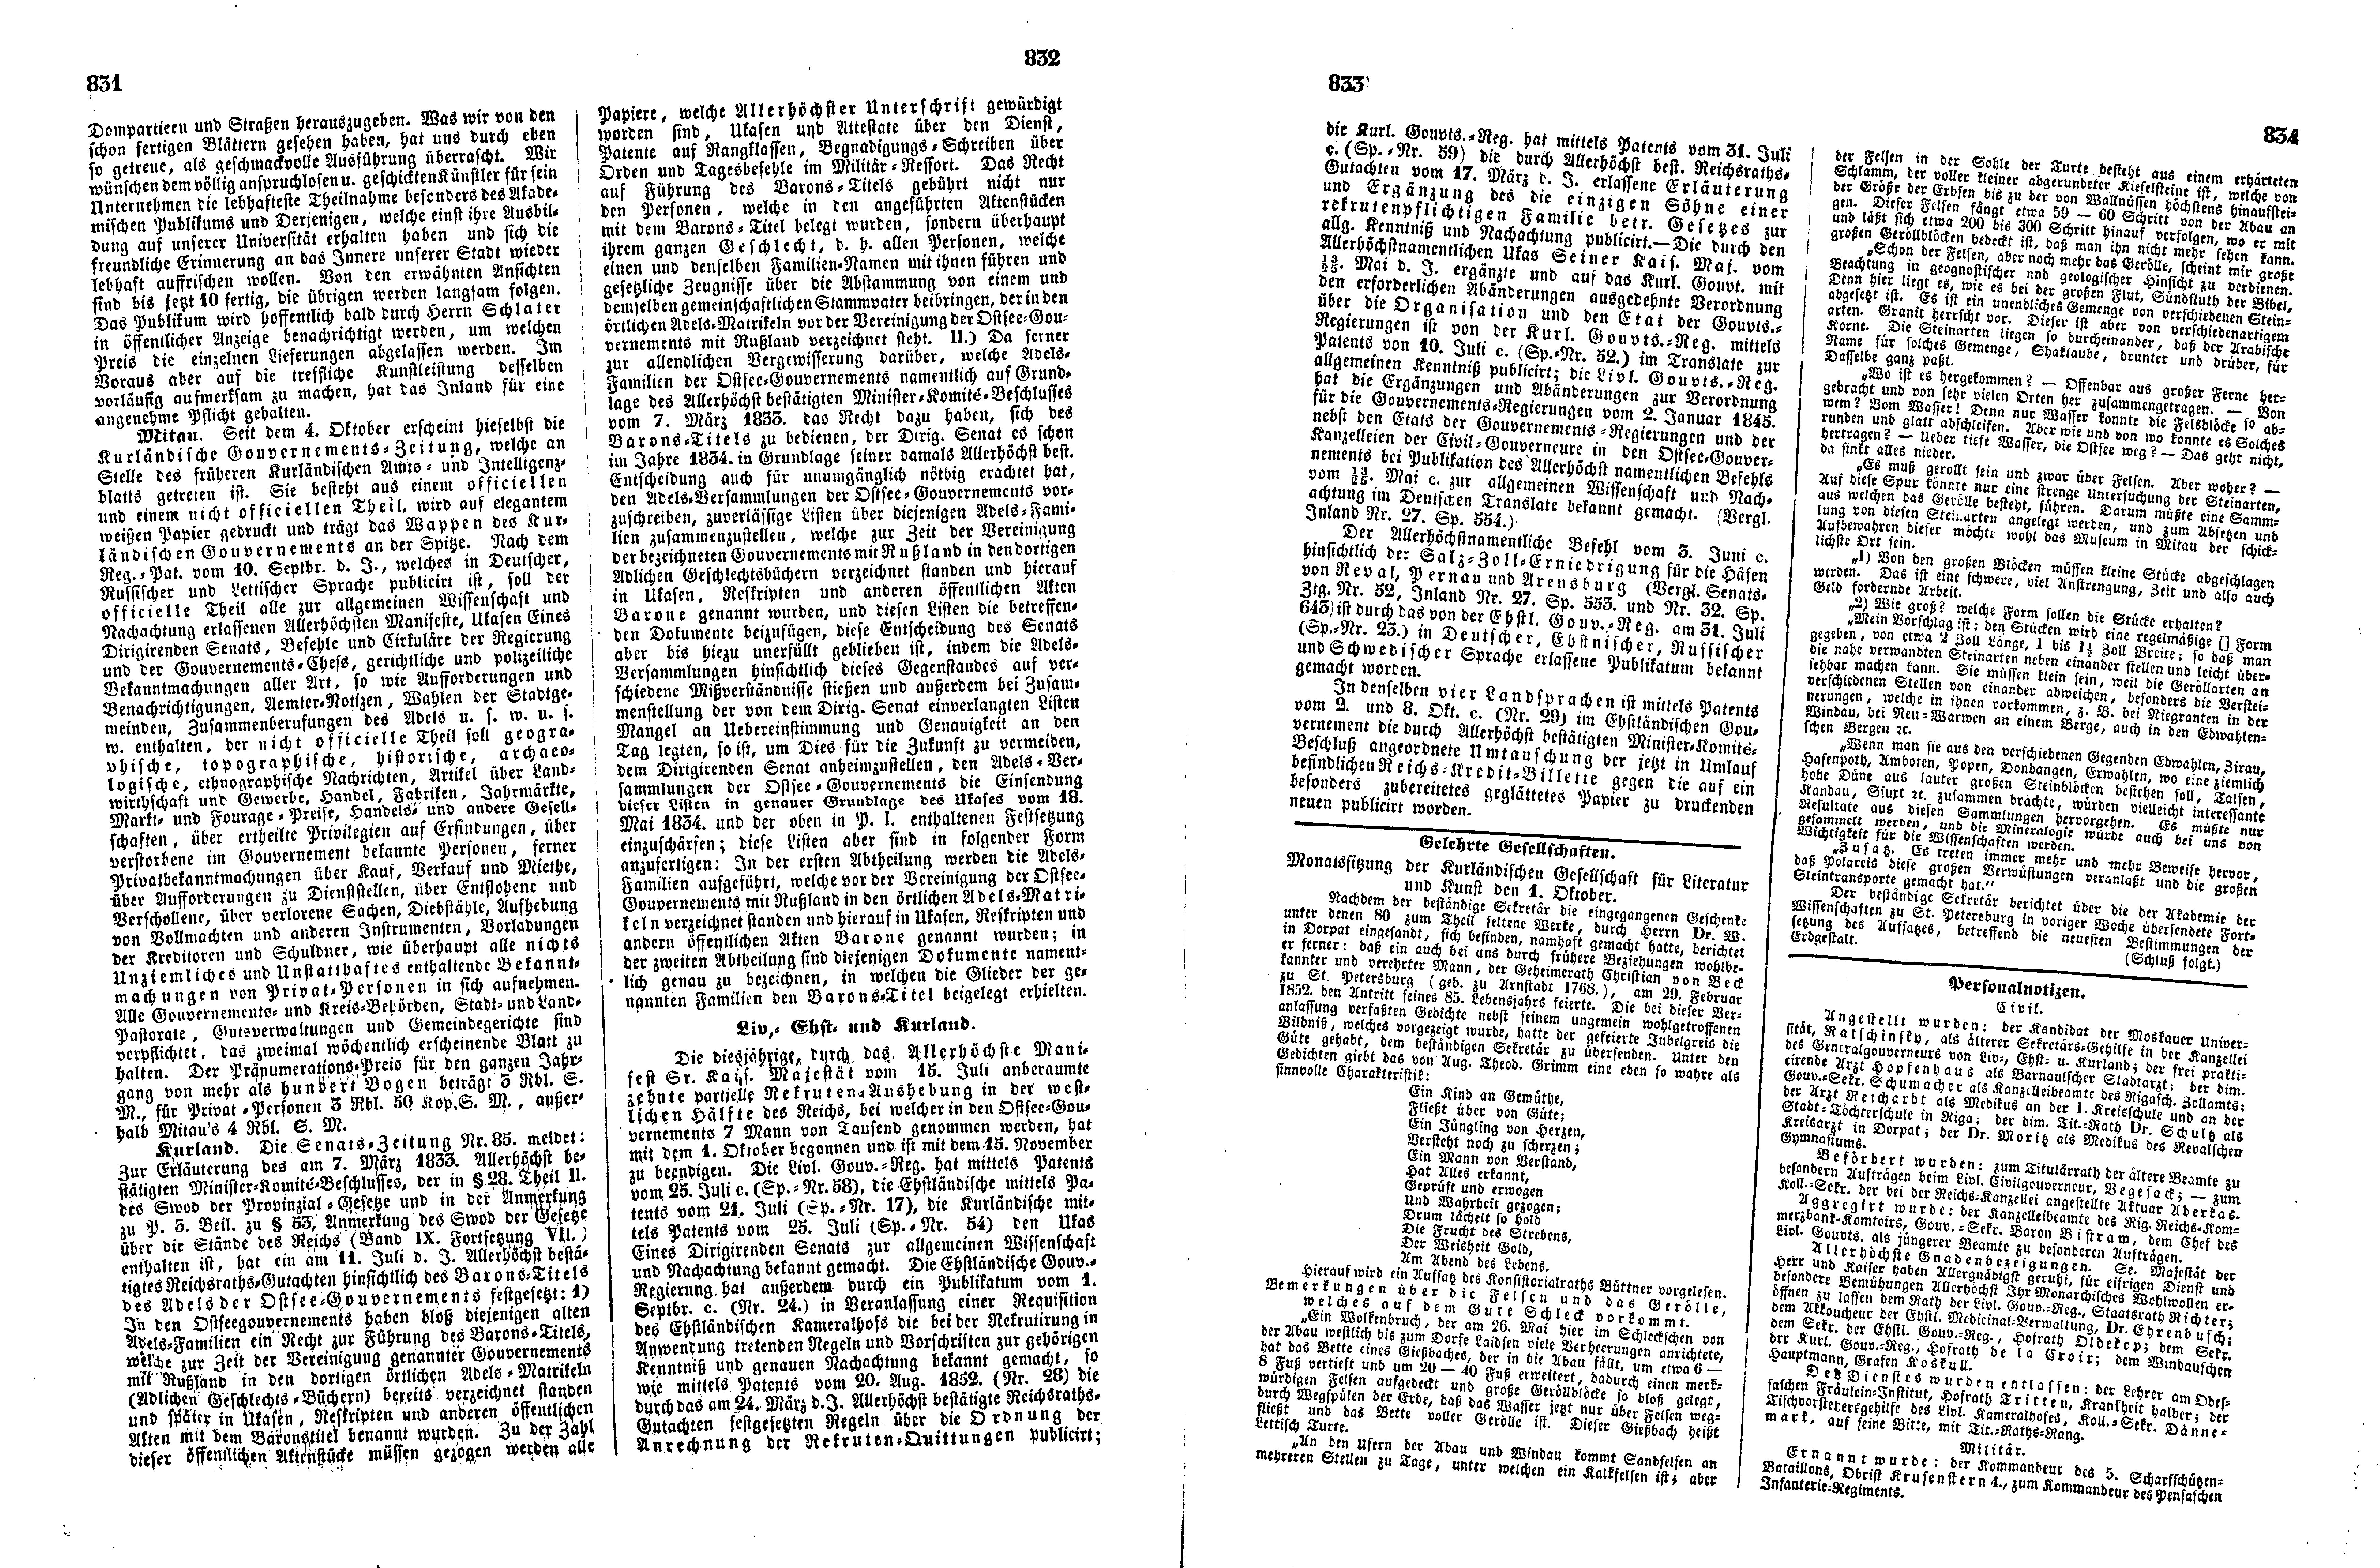 Das Inland [17] (1852) | 213. (831-834) Main body of text